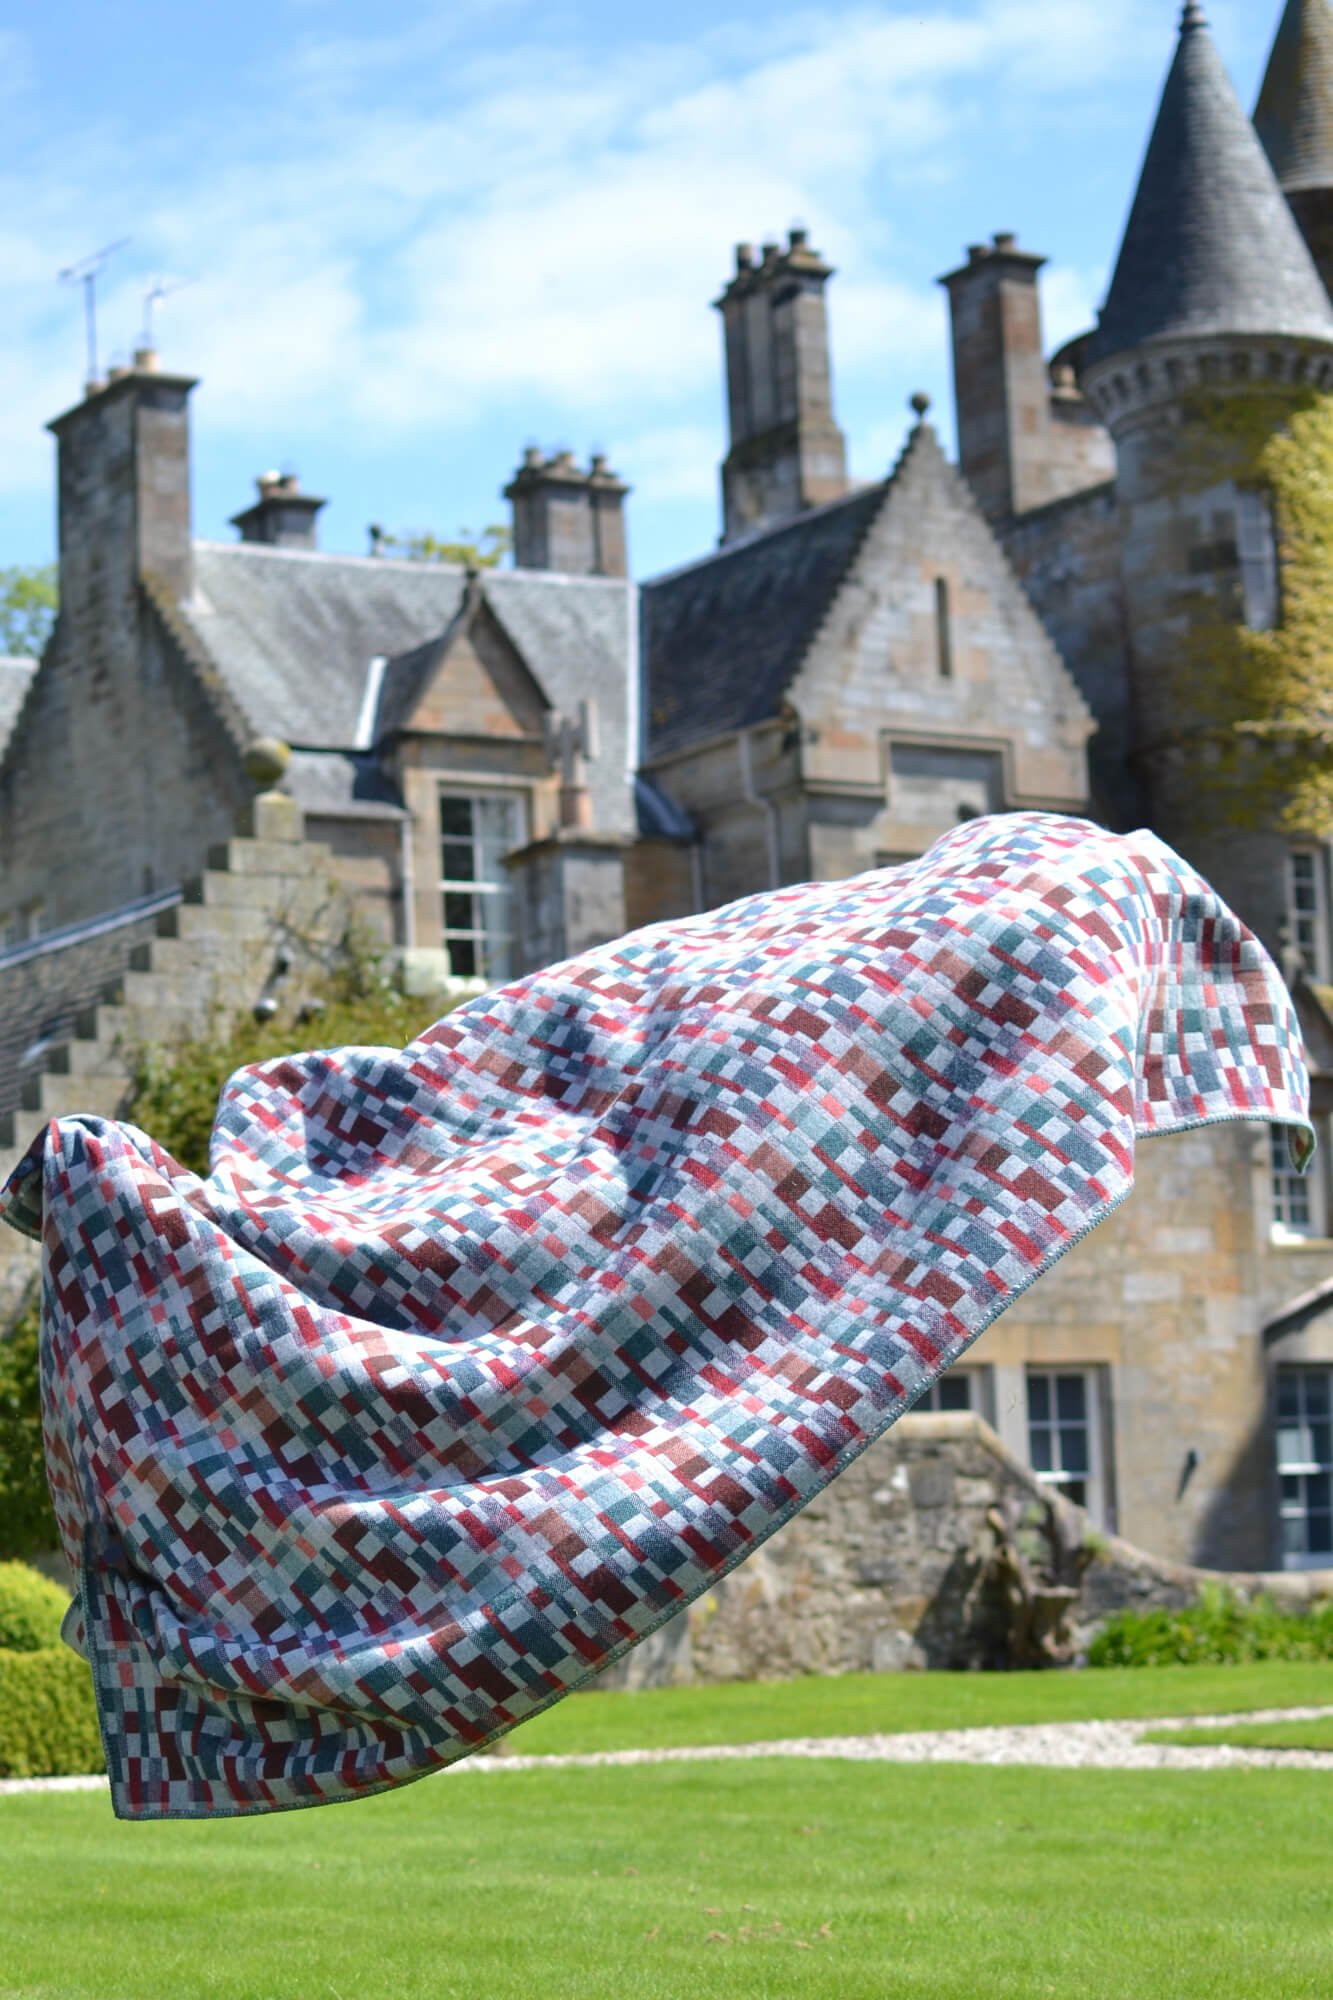 Majeda-Clarke-Isobel-Wylie-Hutchison-TULUK-superfine-merino-wool-geelong-reversible-blanket-Carlowrie-Castle-Craft-Design-House-Collection-6.jpg